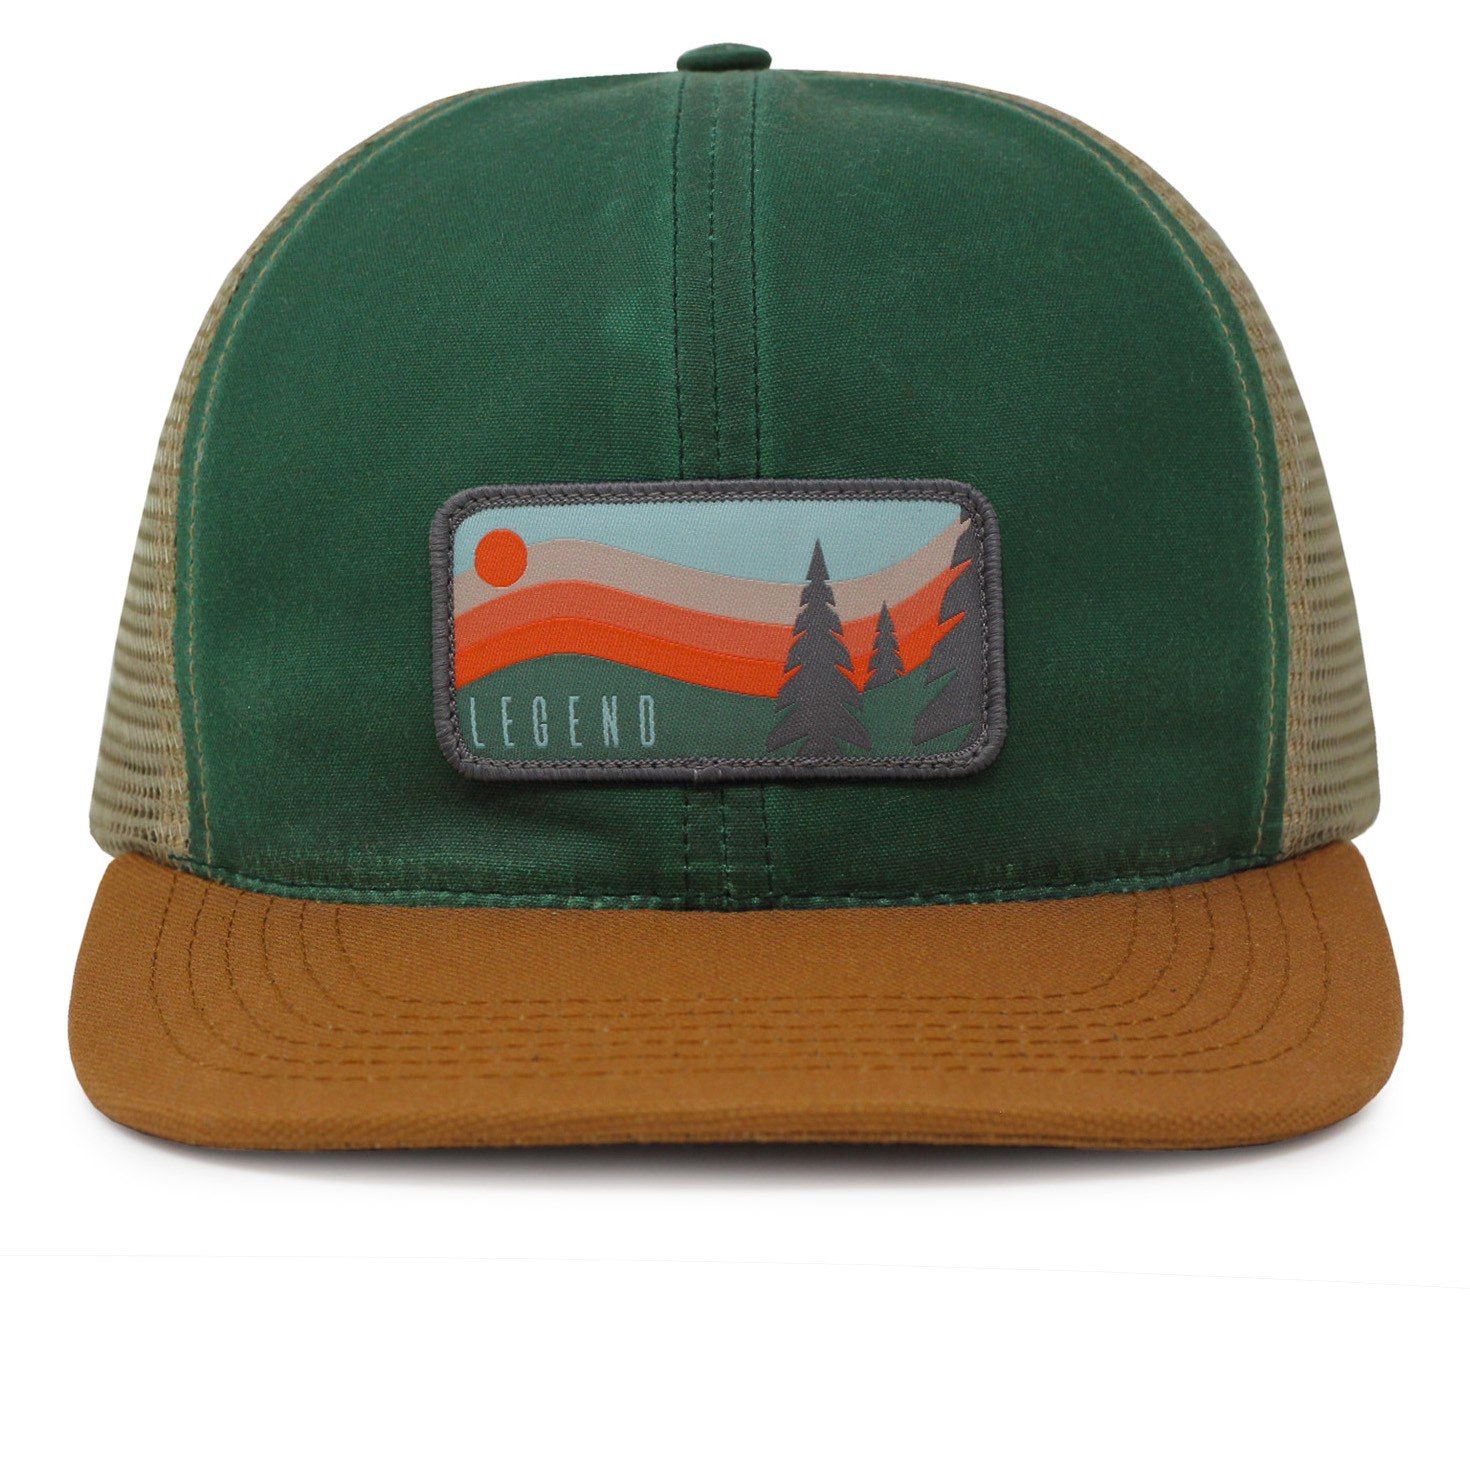 Baseball Cap Everyone Loves a Shady Beach Snapbacks Truker Hats Unisex Adjustable Fashion Cap